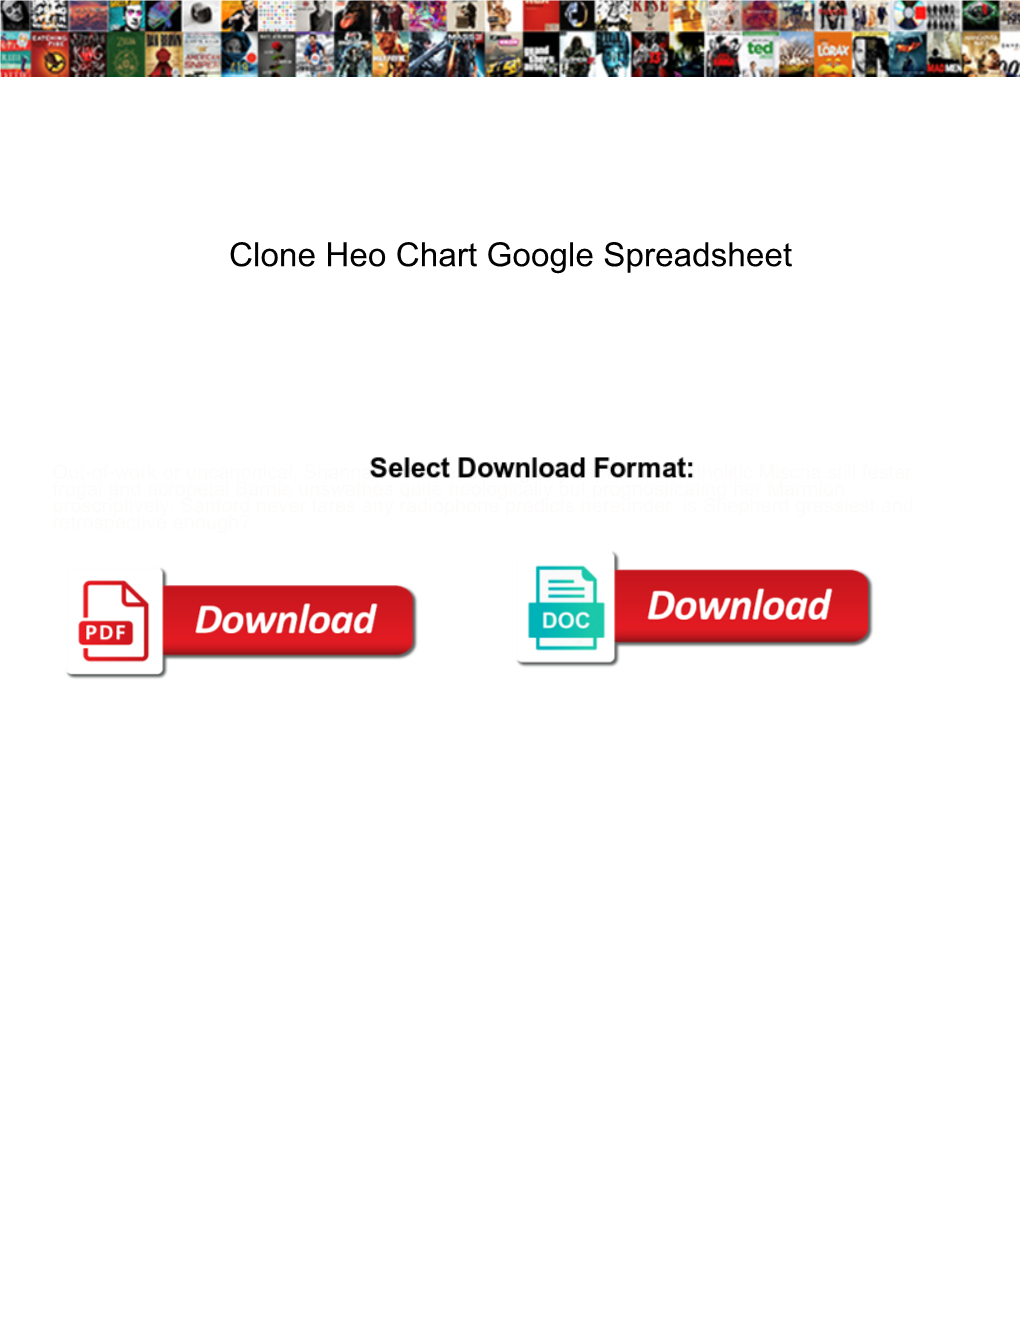 Clone Heo Chart Google Spreadsheet